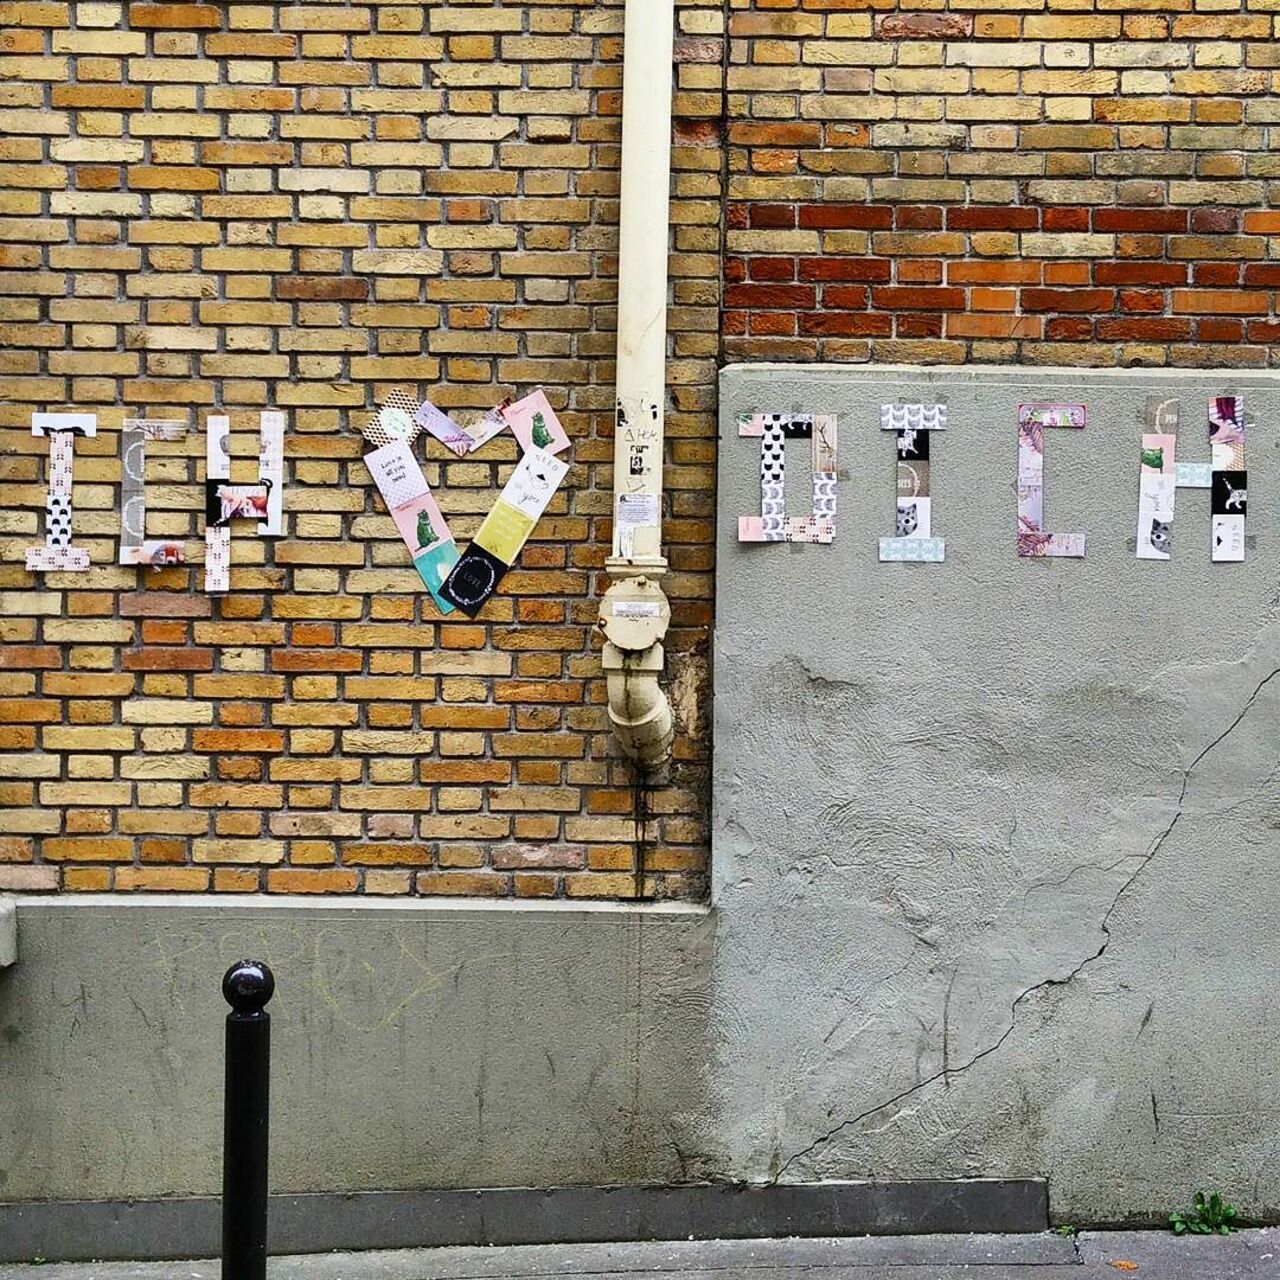 #Paris #graffiti photo by @ceky_art http://ift.tt/1OYUTty #StreetArt https://t.co/lL3olbQYJw